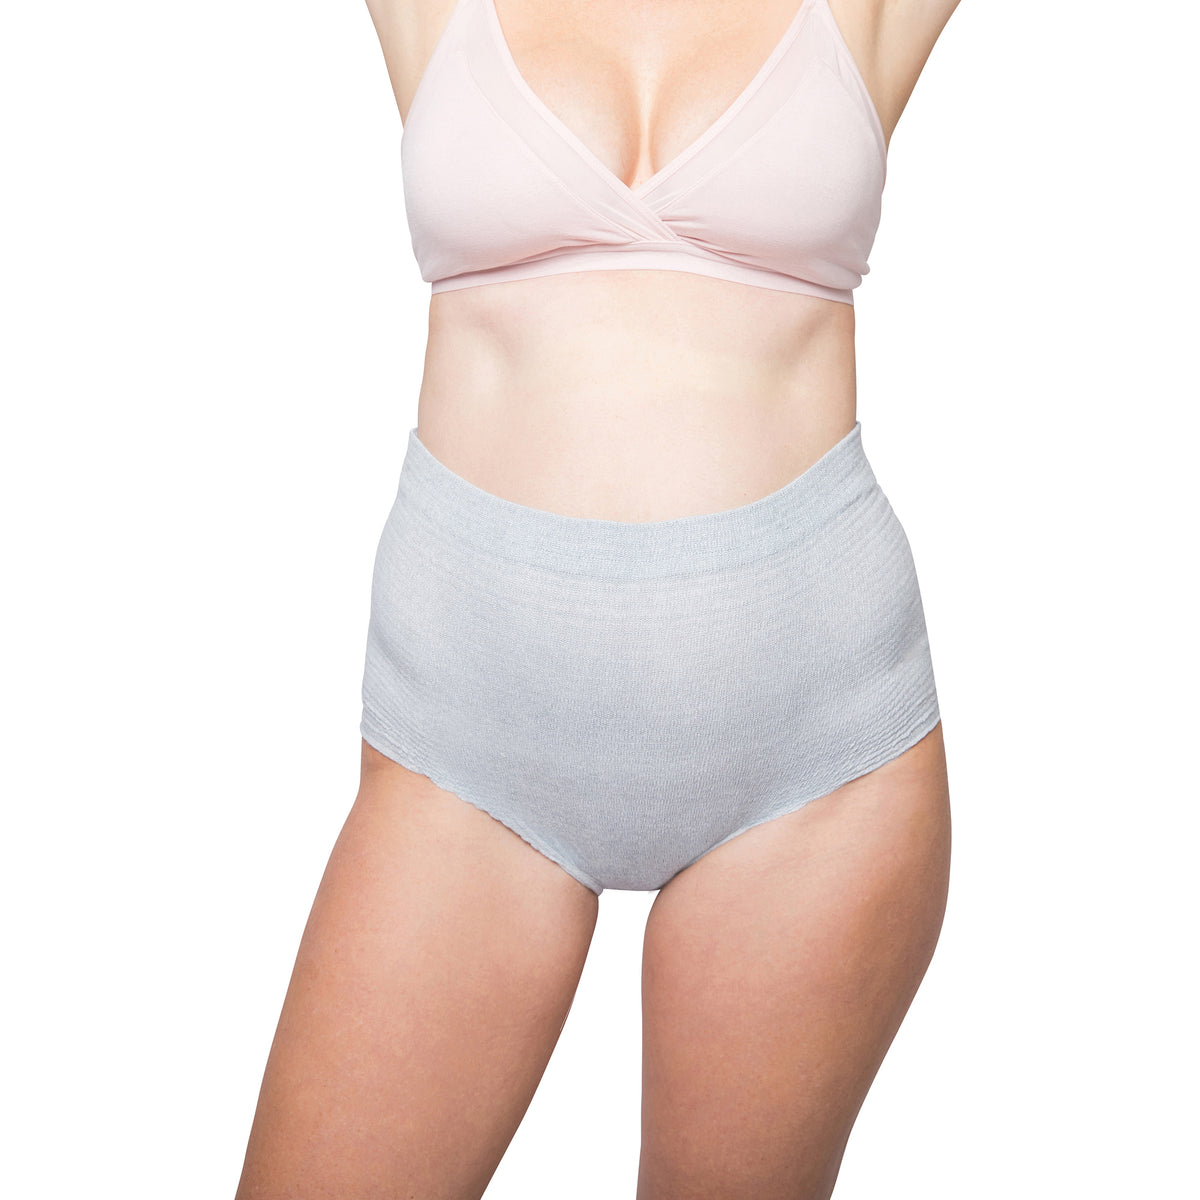 Buy frida mom Boyshort Disposable Postpartum Underwear Petite at